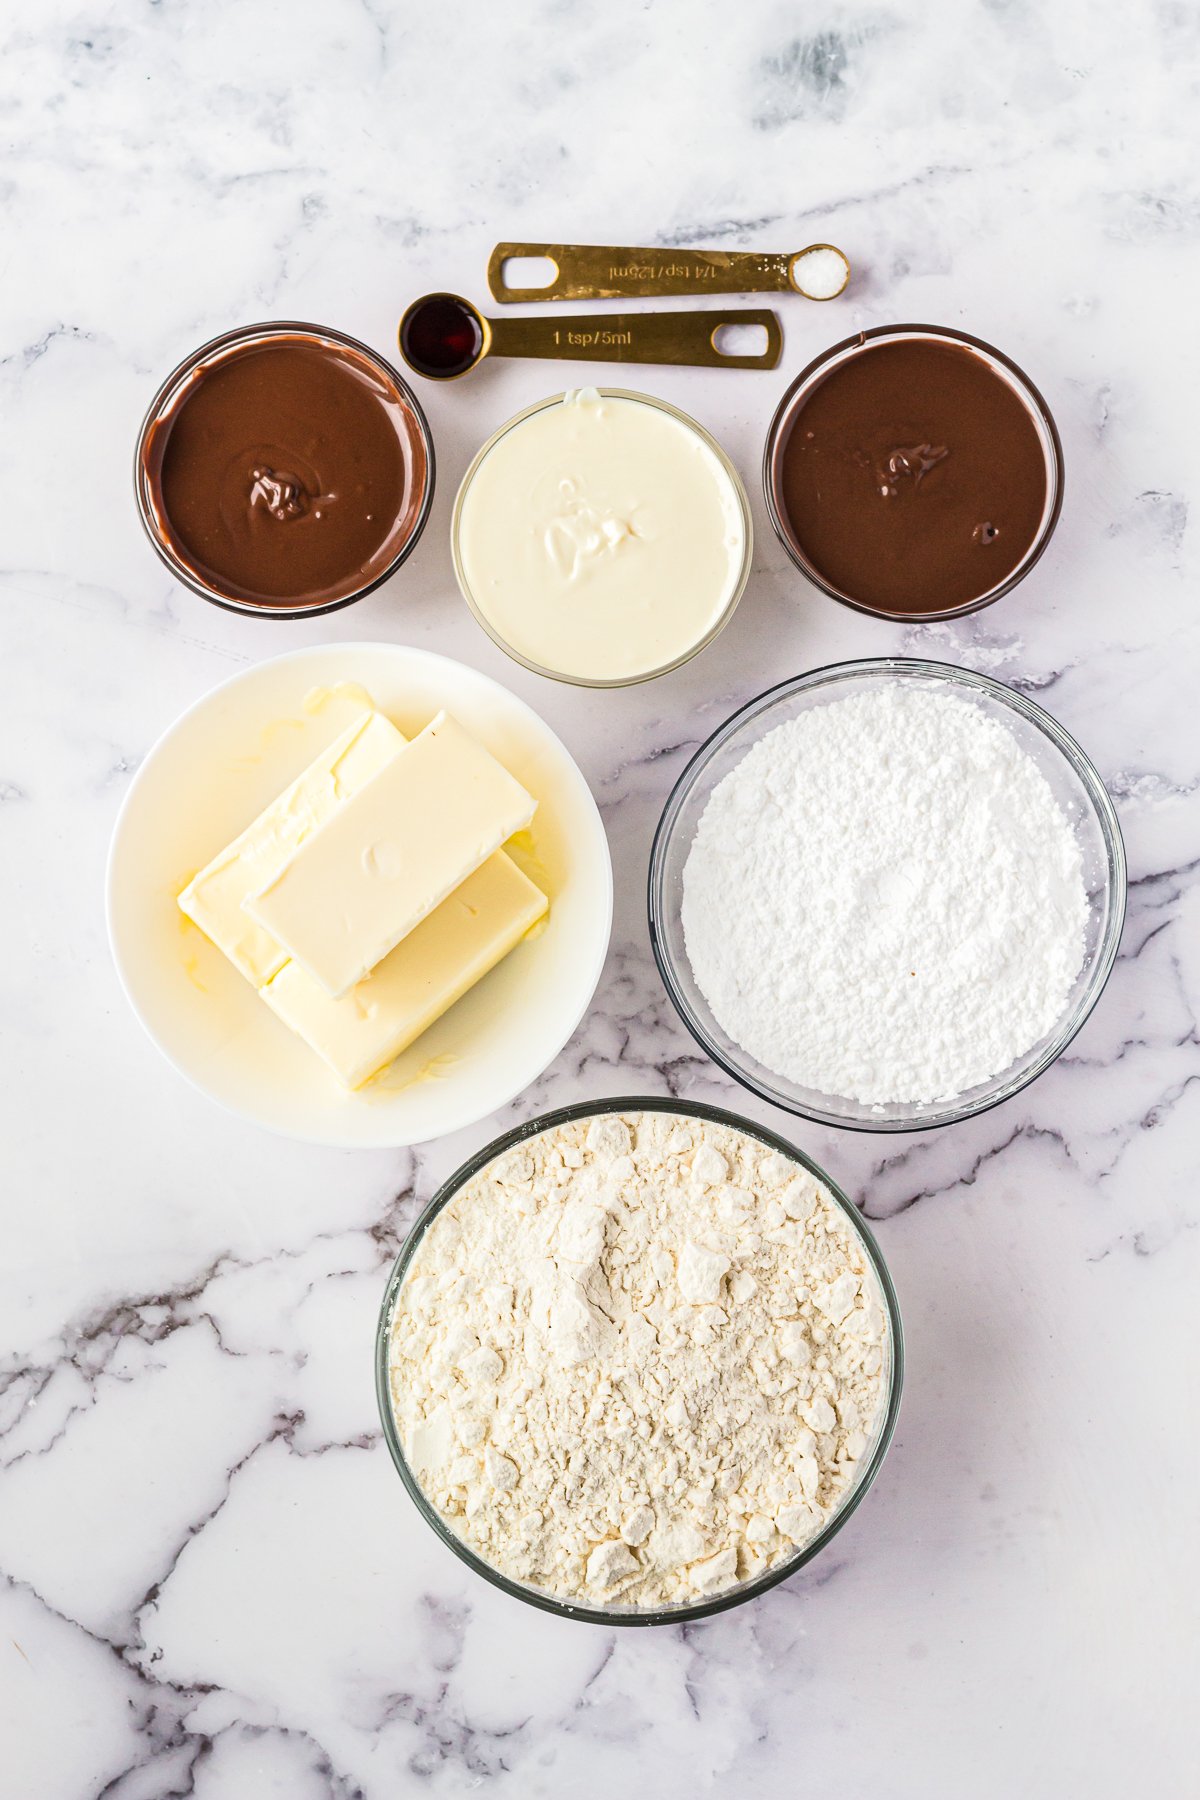 Ingredients needed to make Chocolate Dipped Shortbread Cookies.